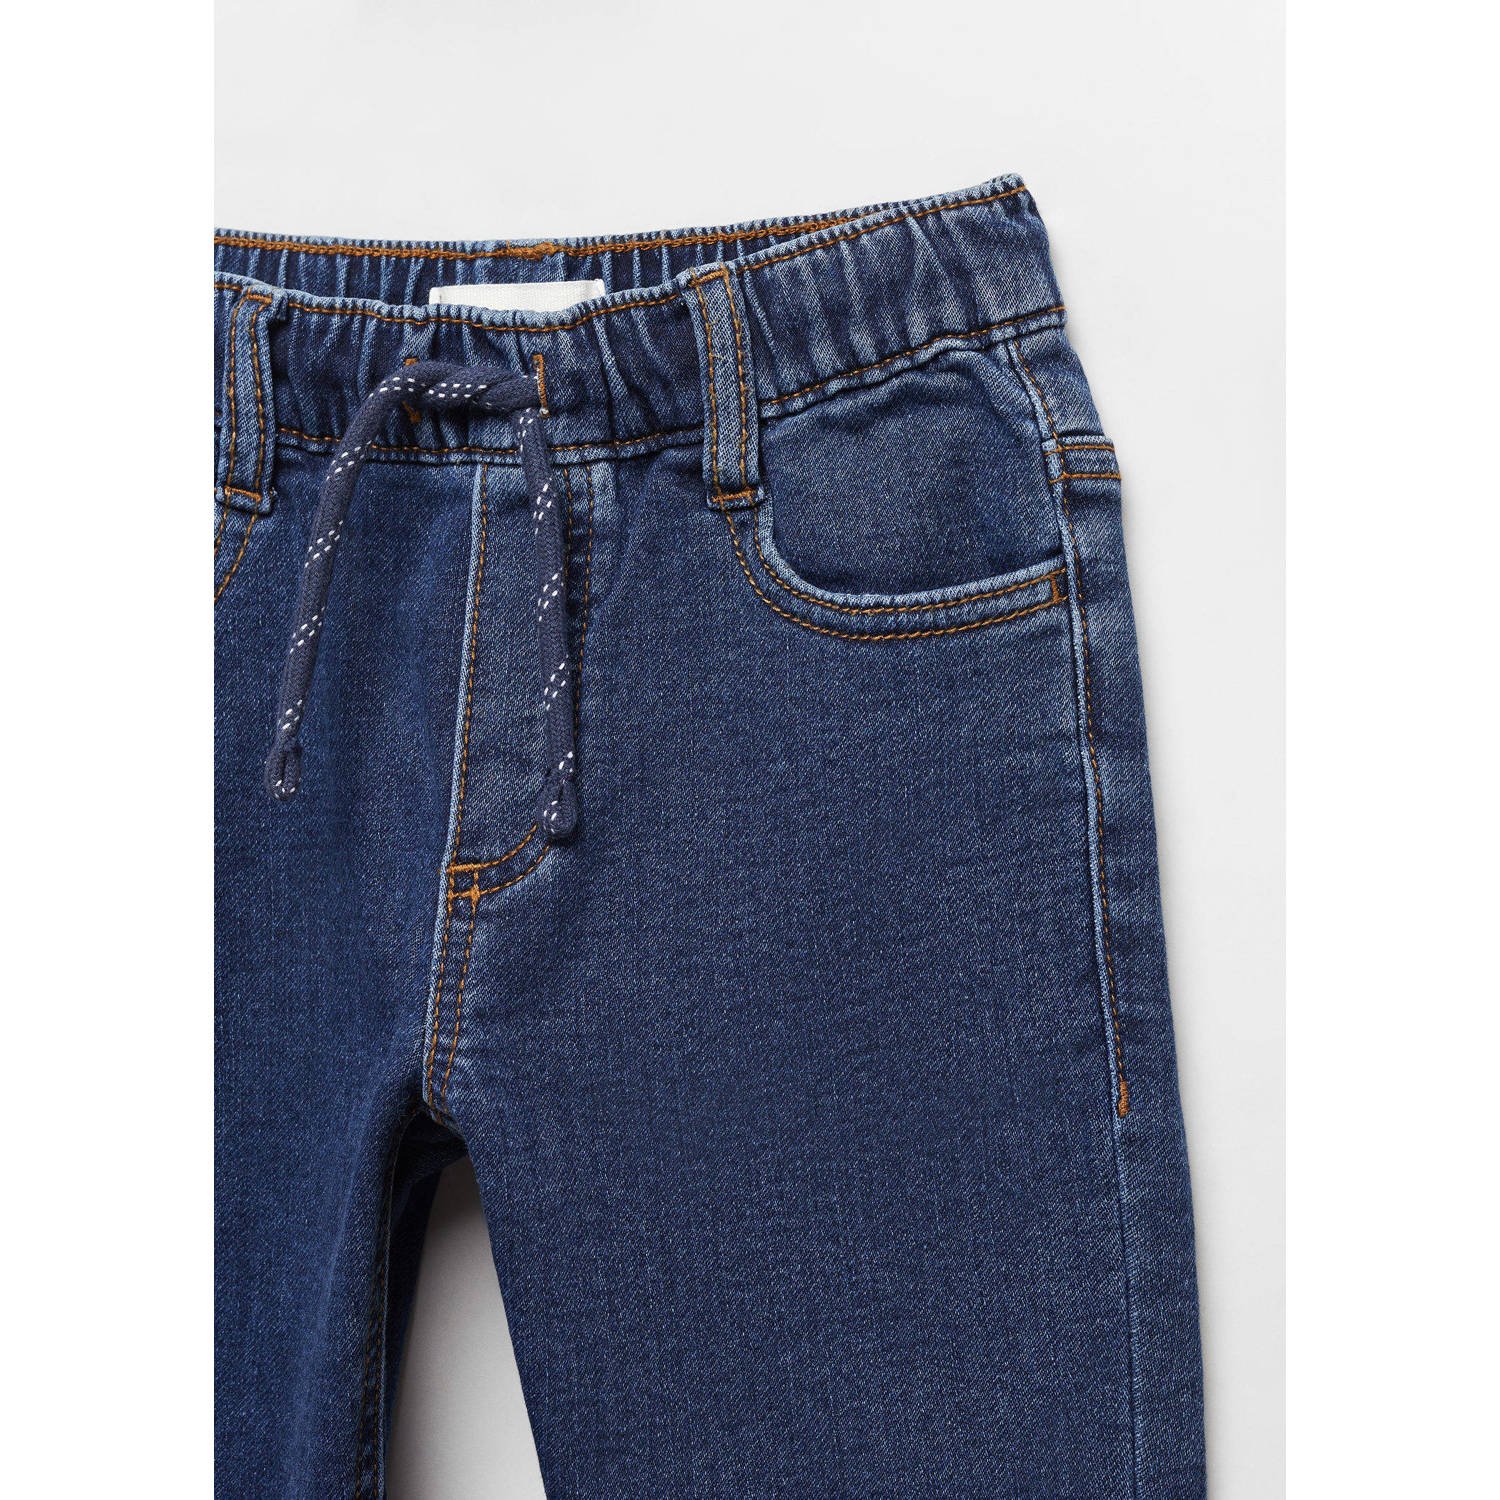 Mango Kids slim fit jeans changeant blauw